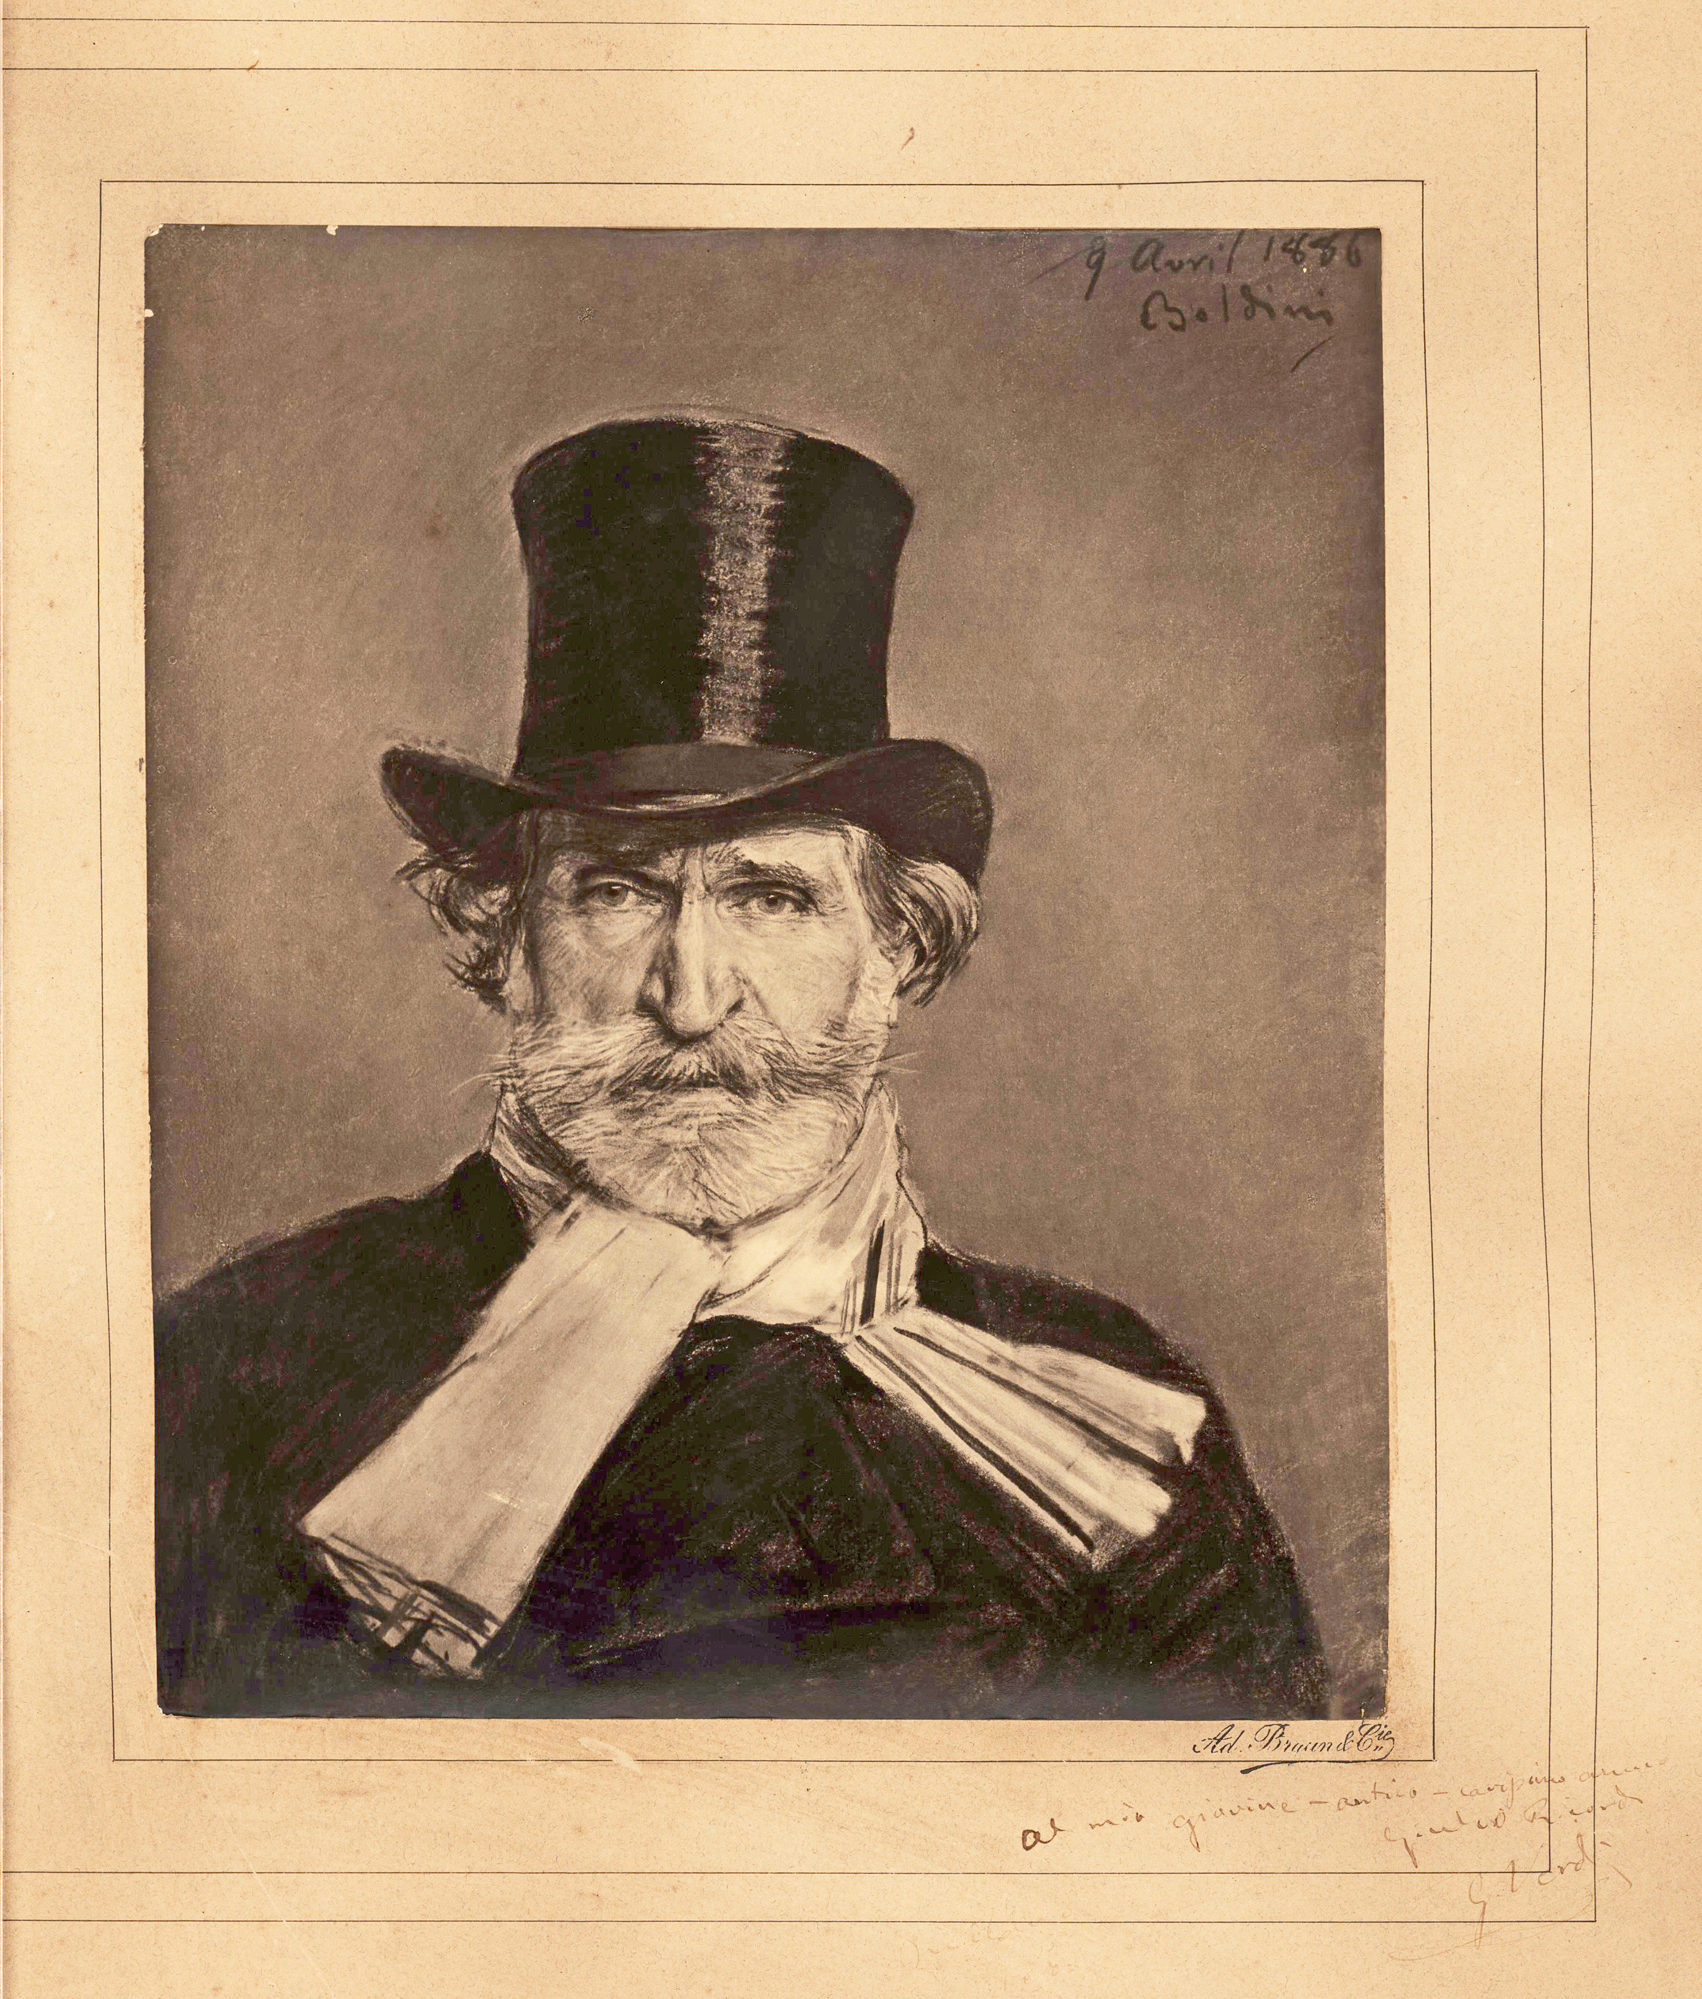 Image signed by Verdi